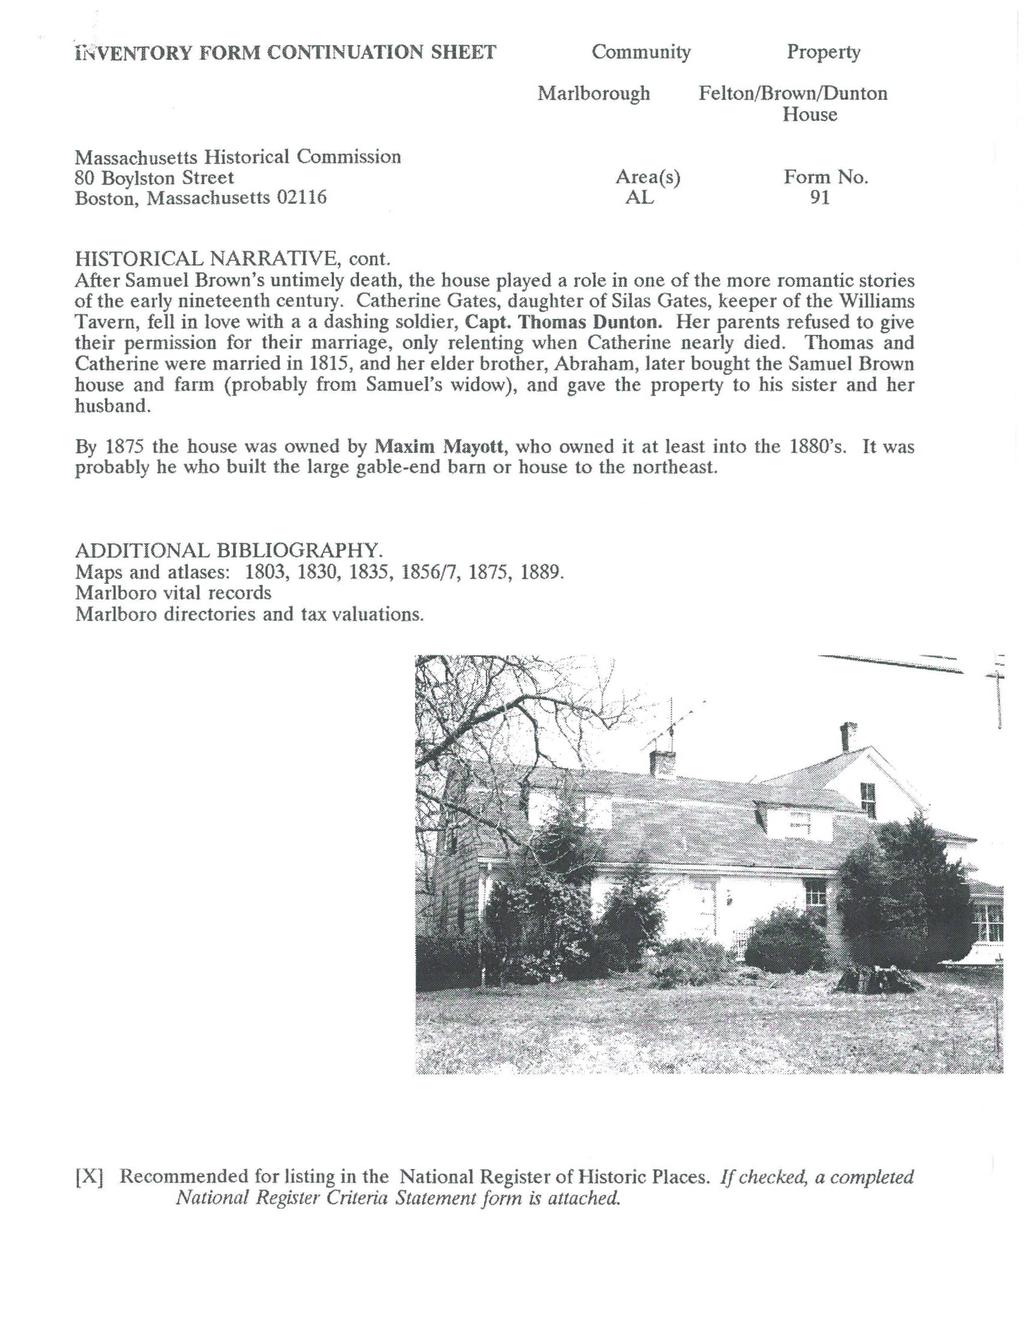 ii~ventory FORM CONTINUATION SHEET Community Property Massachusetts Historical Commission Marlborough Felton/Brown/Dunton House Form No. 91 HISTORIC NARRATIVE, cont.